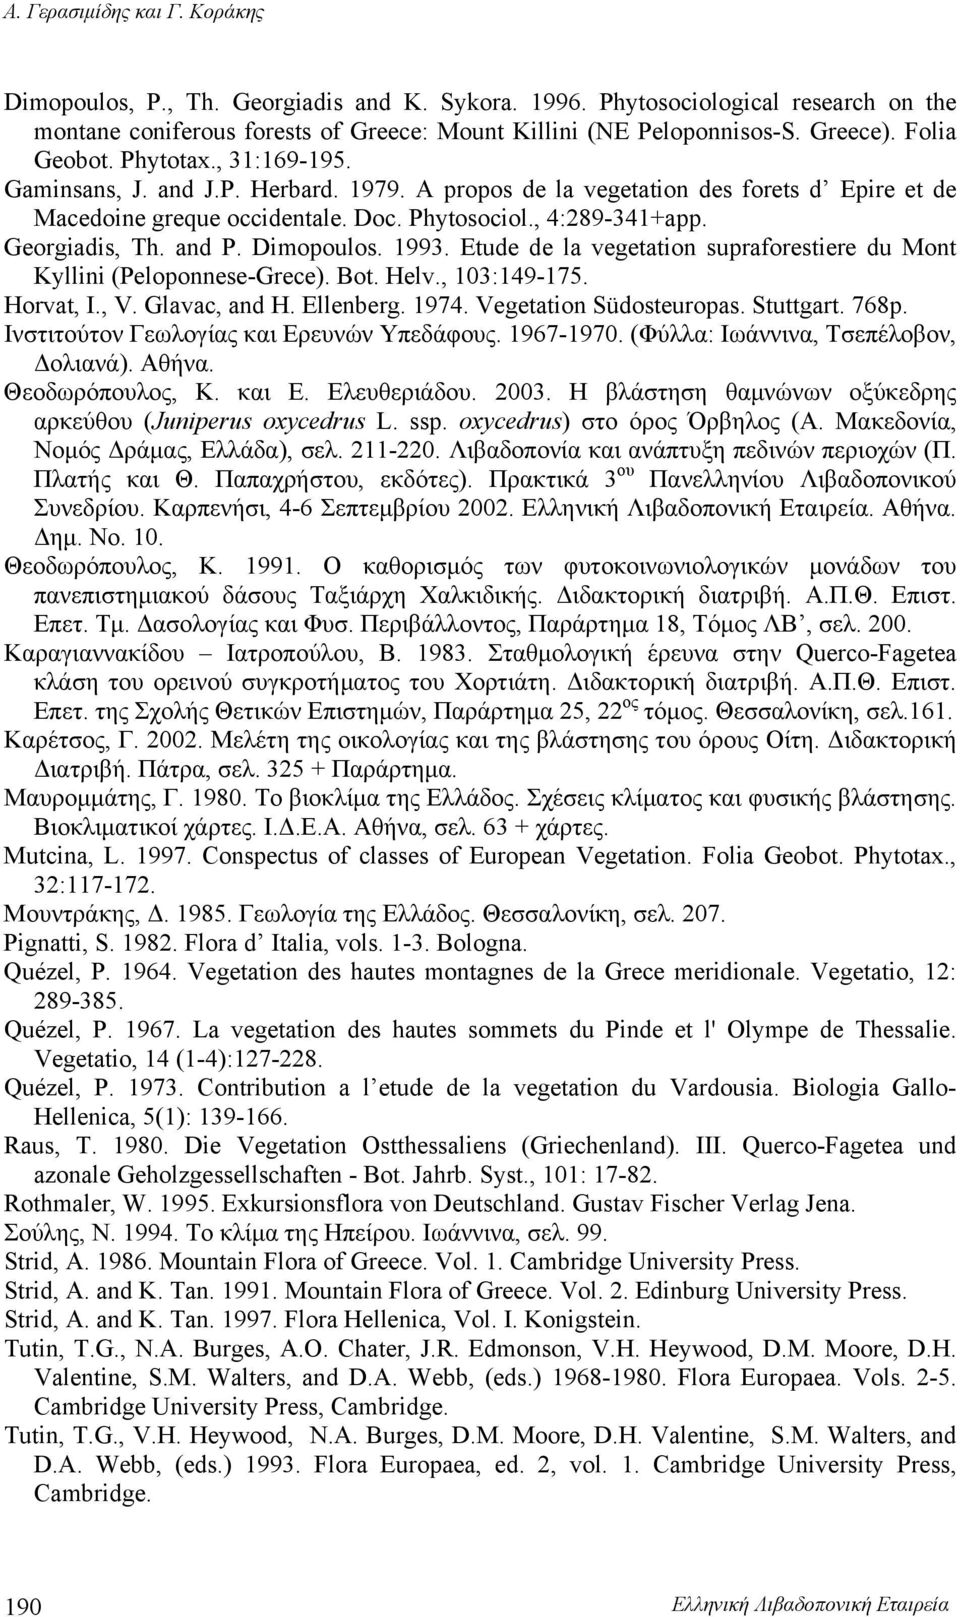 Georgiadis, Th. and P. Dimopoulos. 1993. Etude de la vegetation supraforestiere du Mont Kyllini (Peloponnese-Grece). Bot. Helv., 103:149-175. Horvat, I., V. Glavac, and H. Ellenberg. 1974.